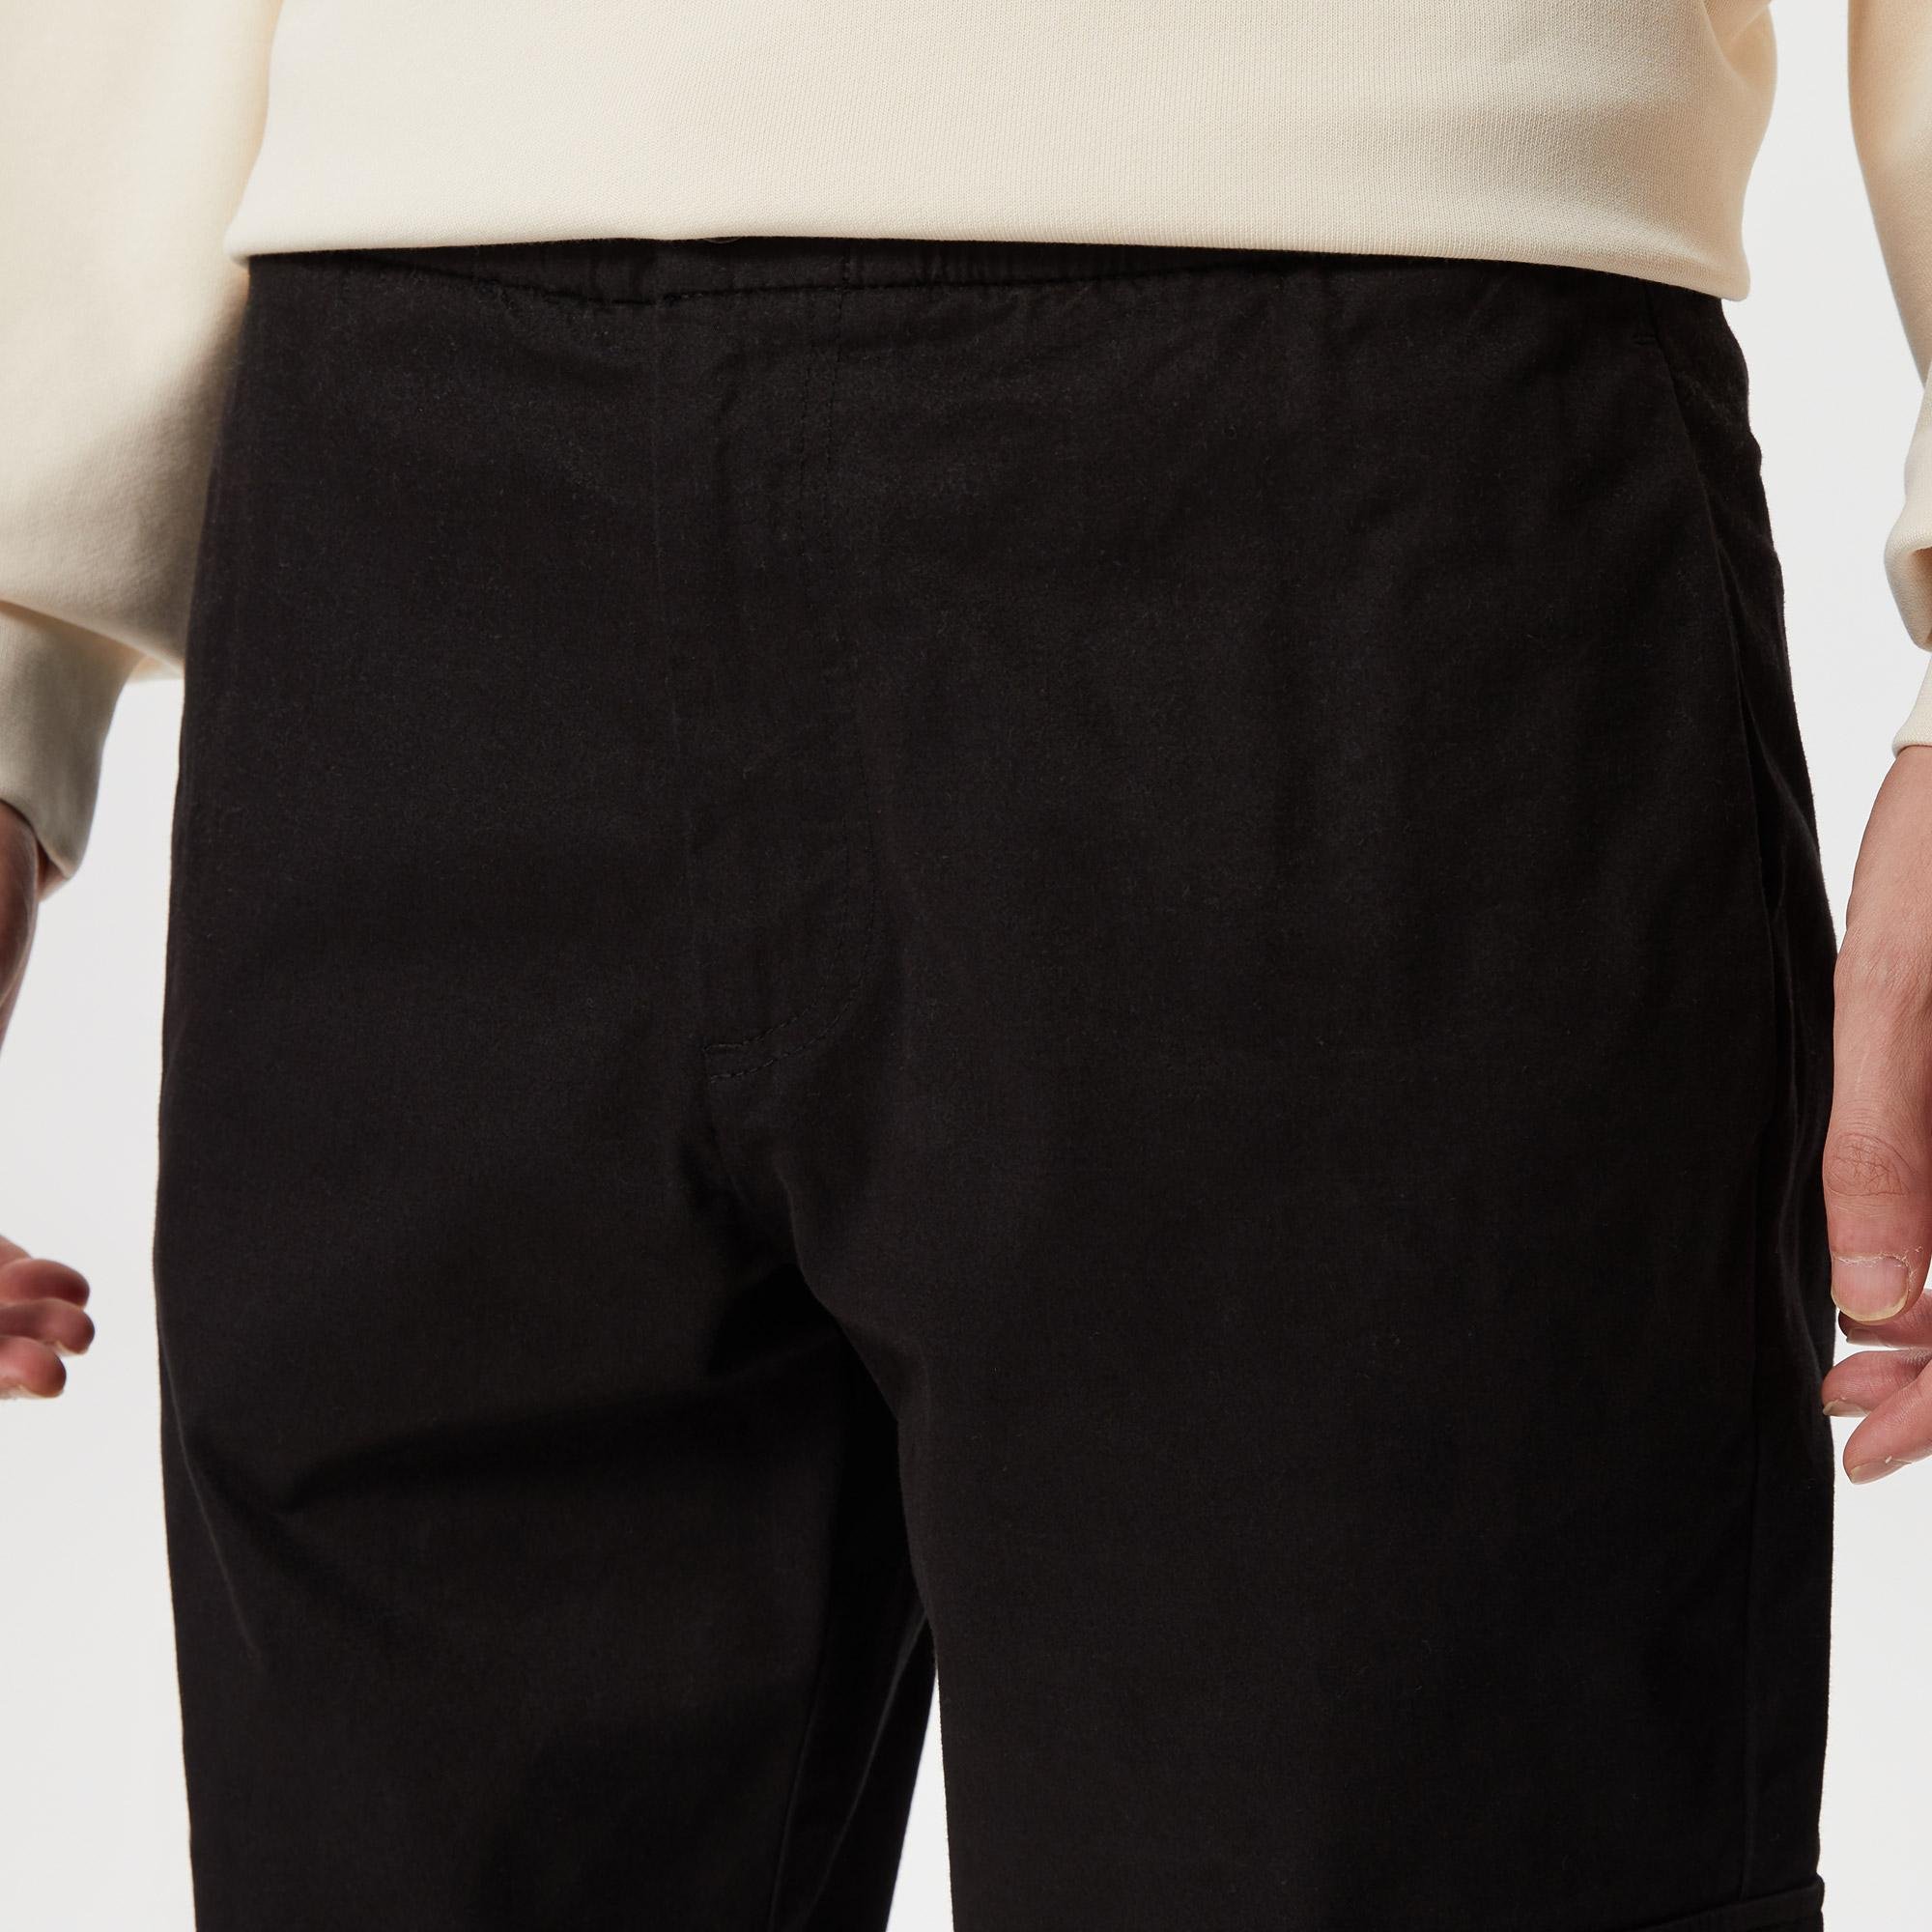 Lacoste spodnie męskie